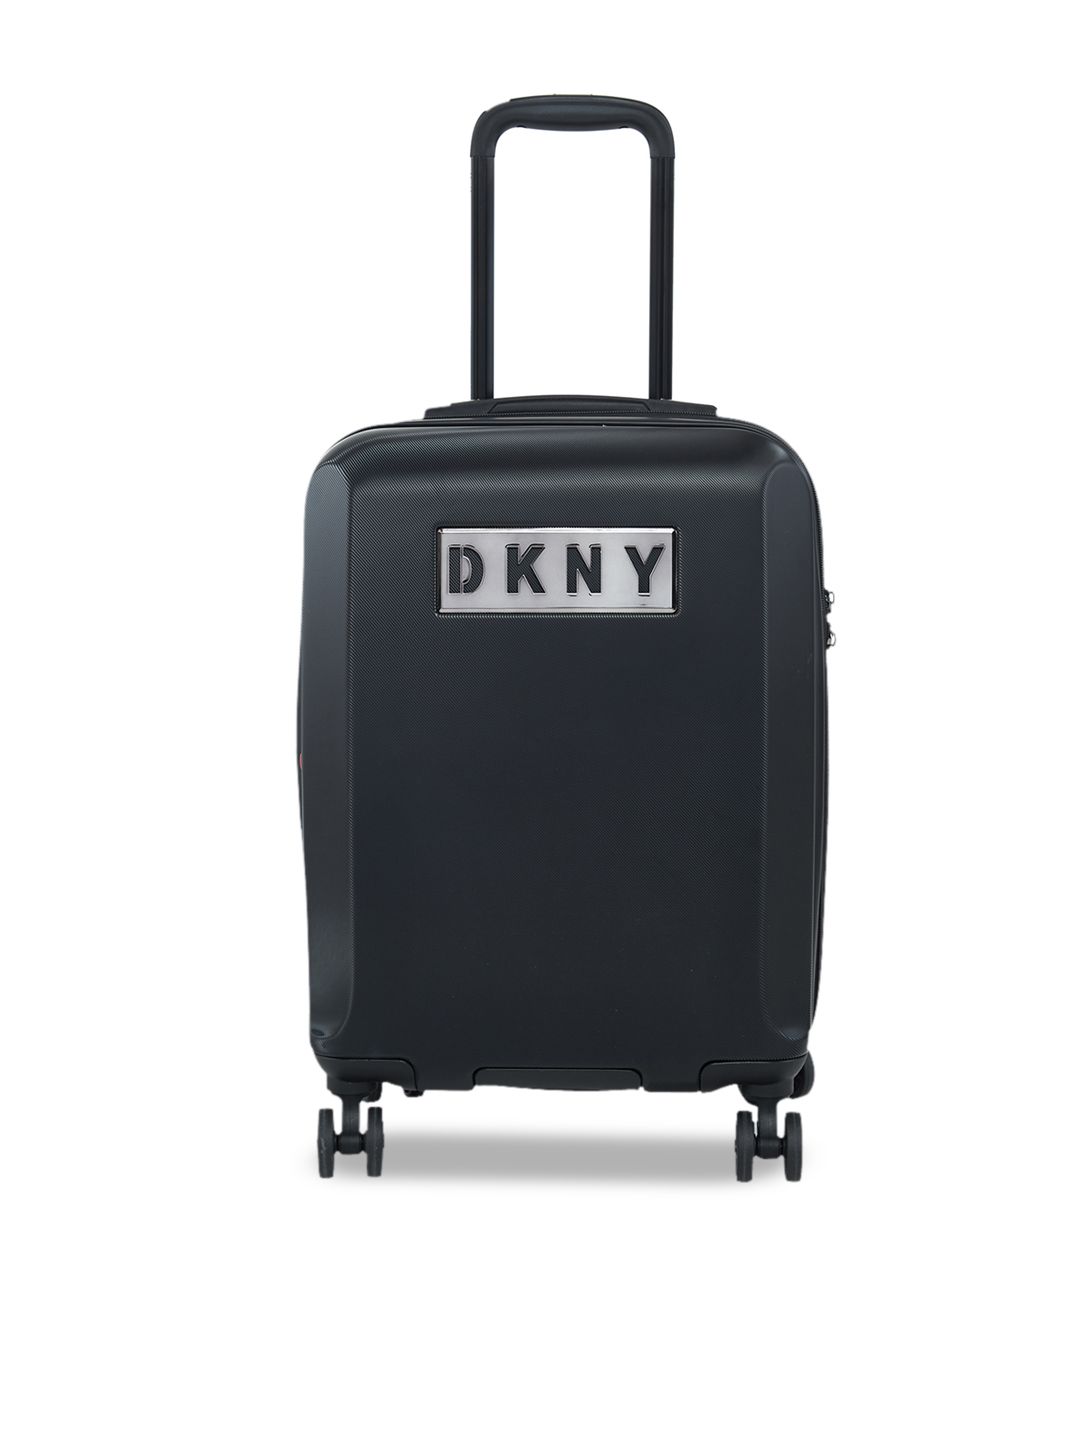 DKNY Alchemy Range Black Hard Cabin Suitcase Price in India